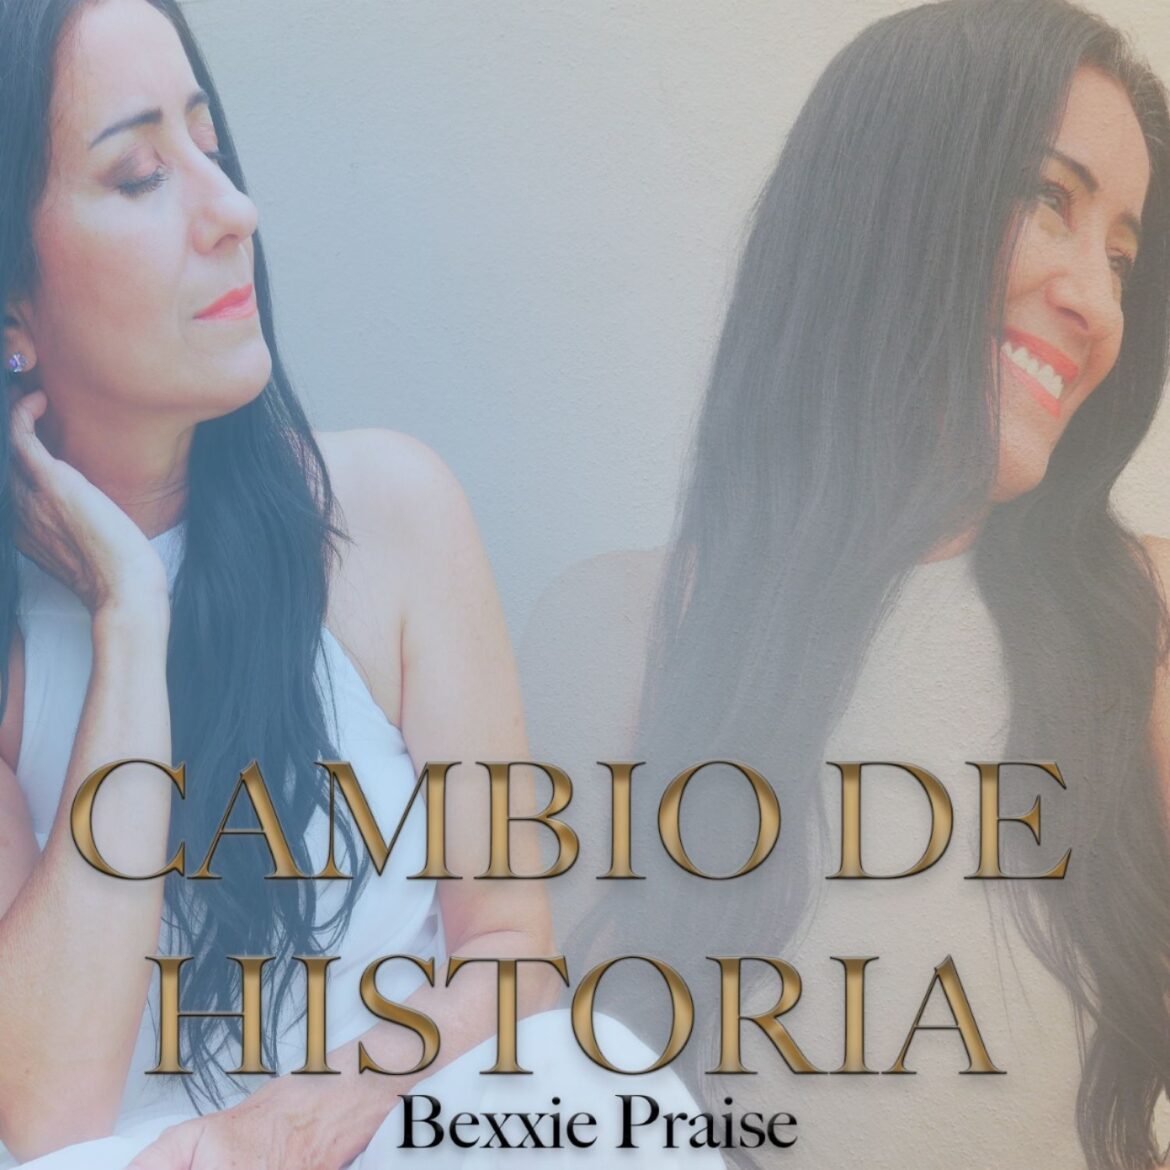 La boricua Bexxie Praise presenta su primer tema musical titulado “Cambio de Historia”